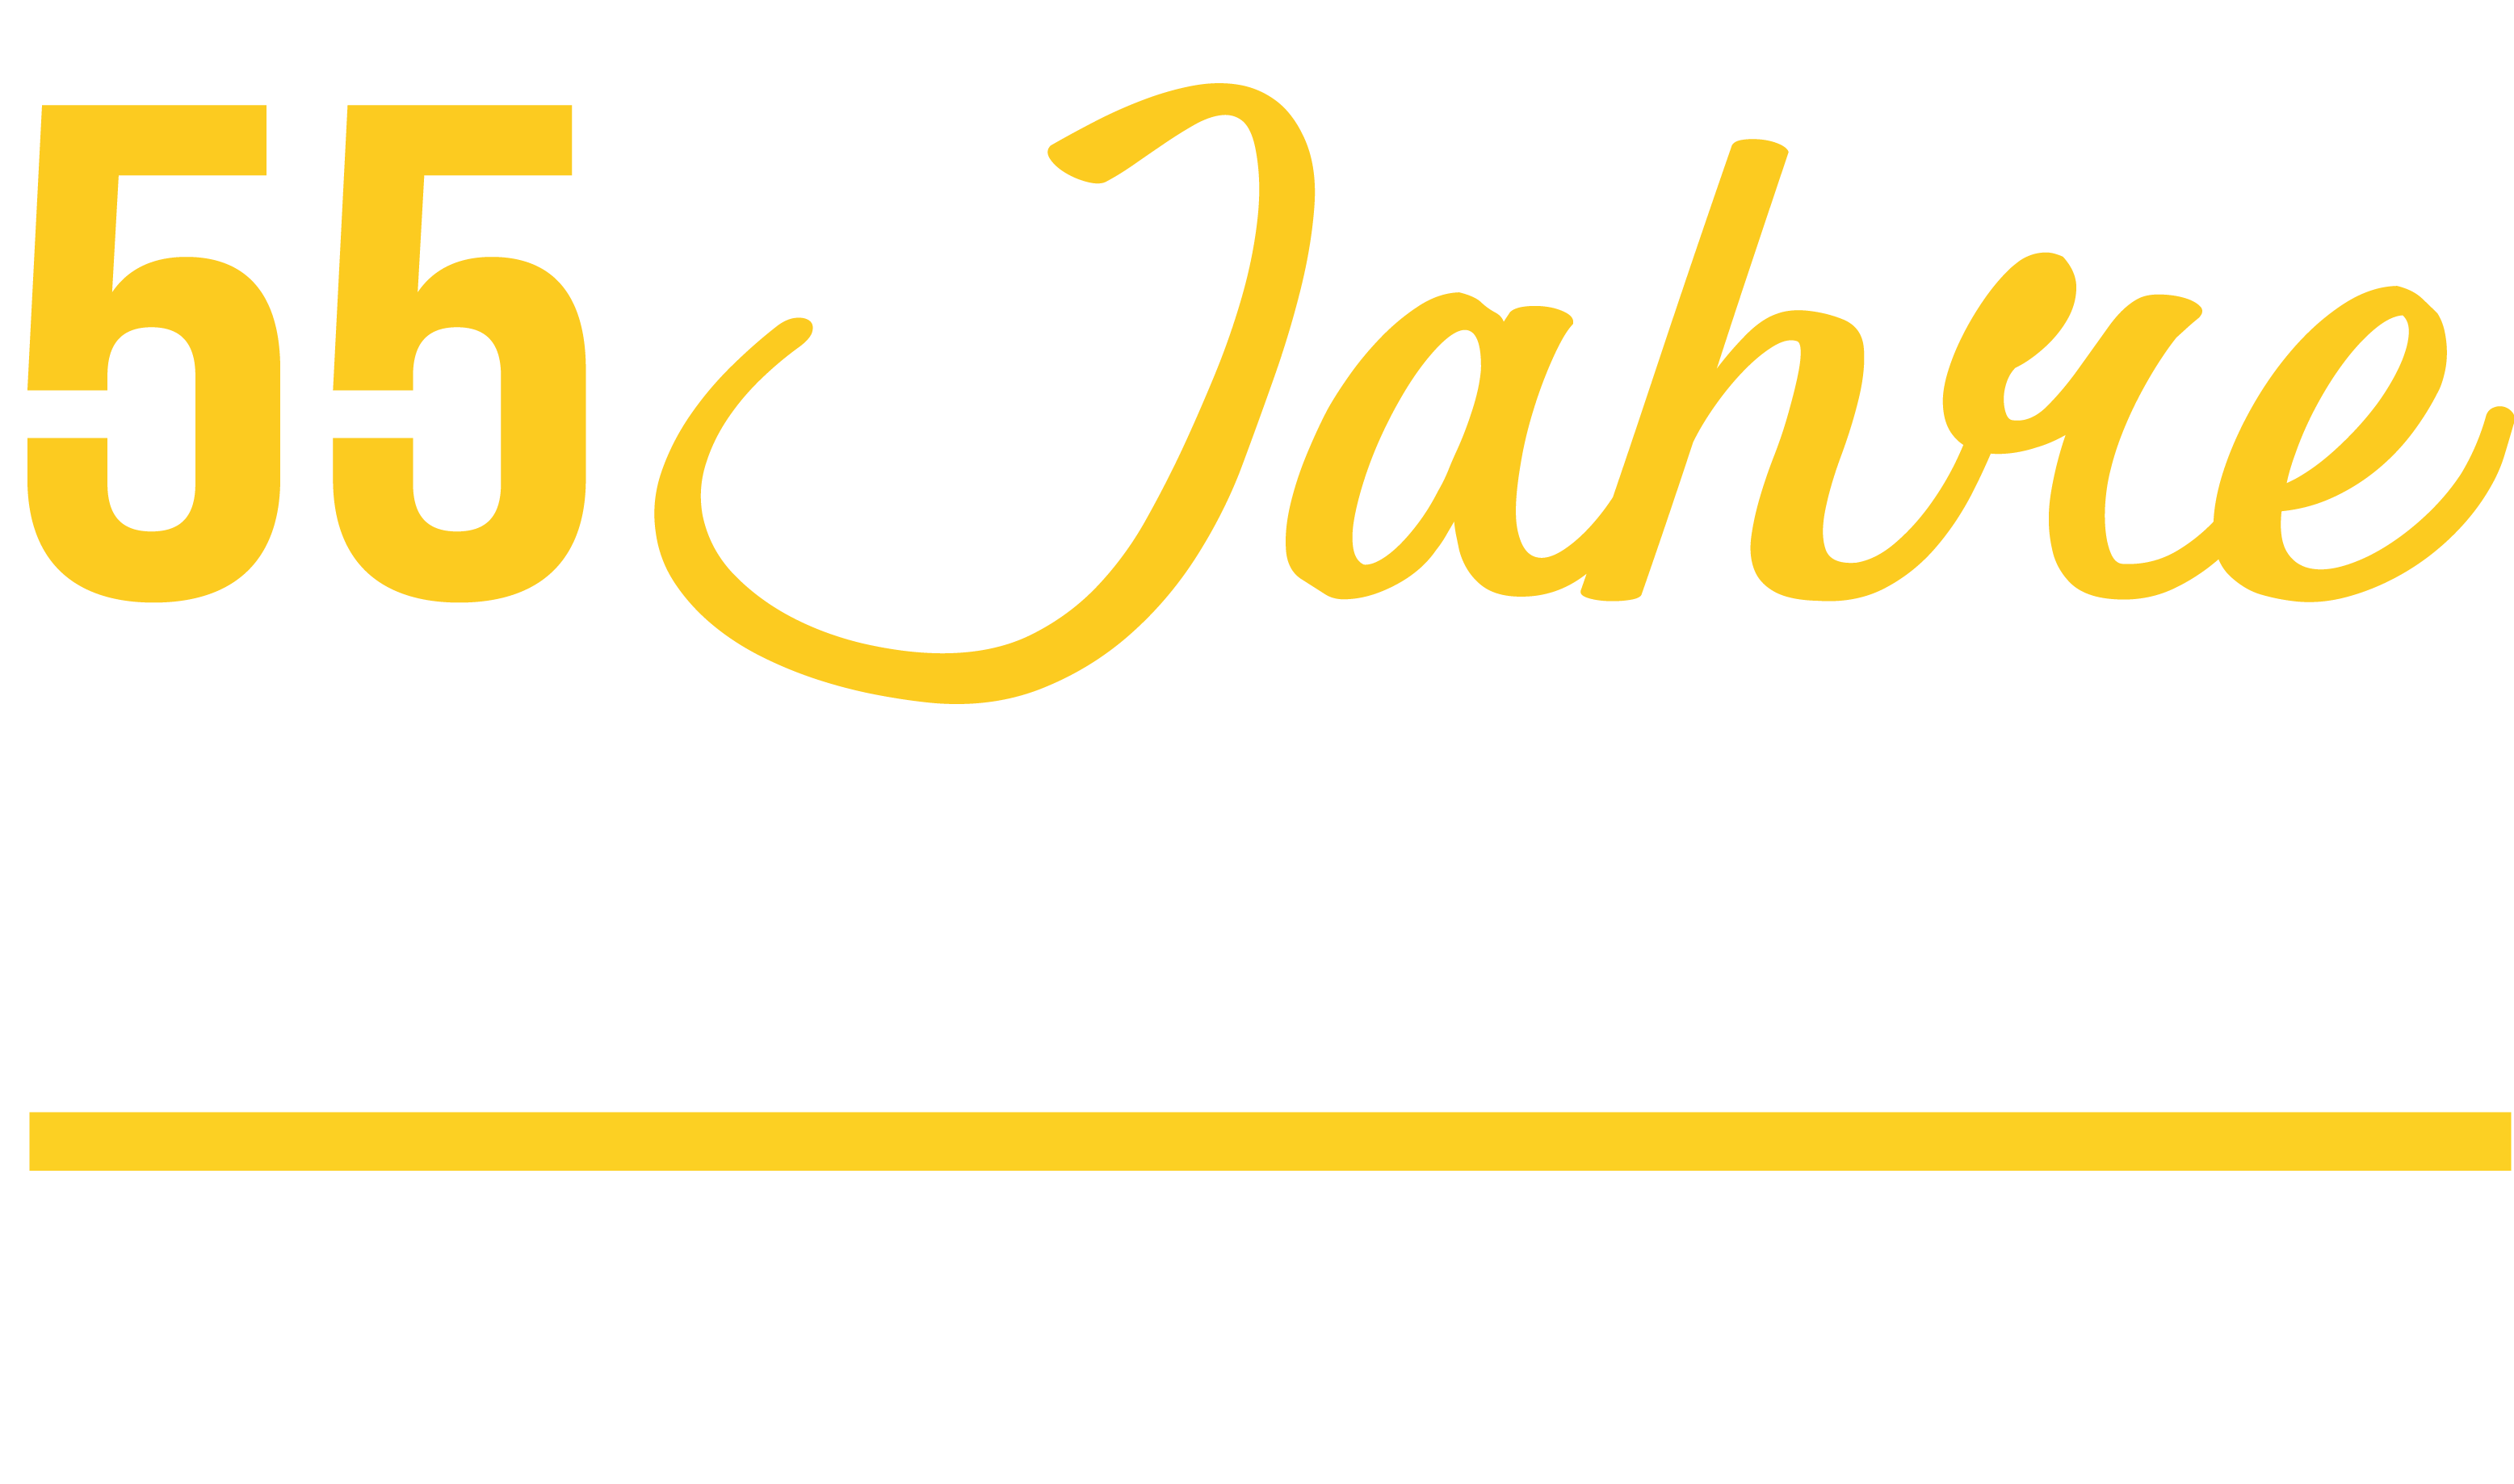 Bohnet GmbH